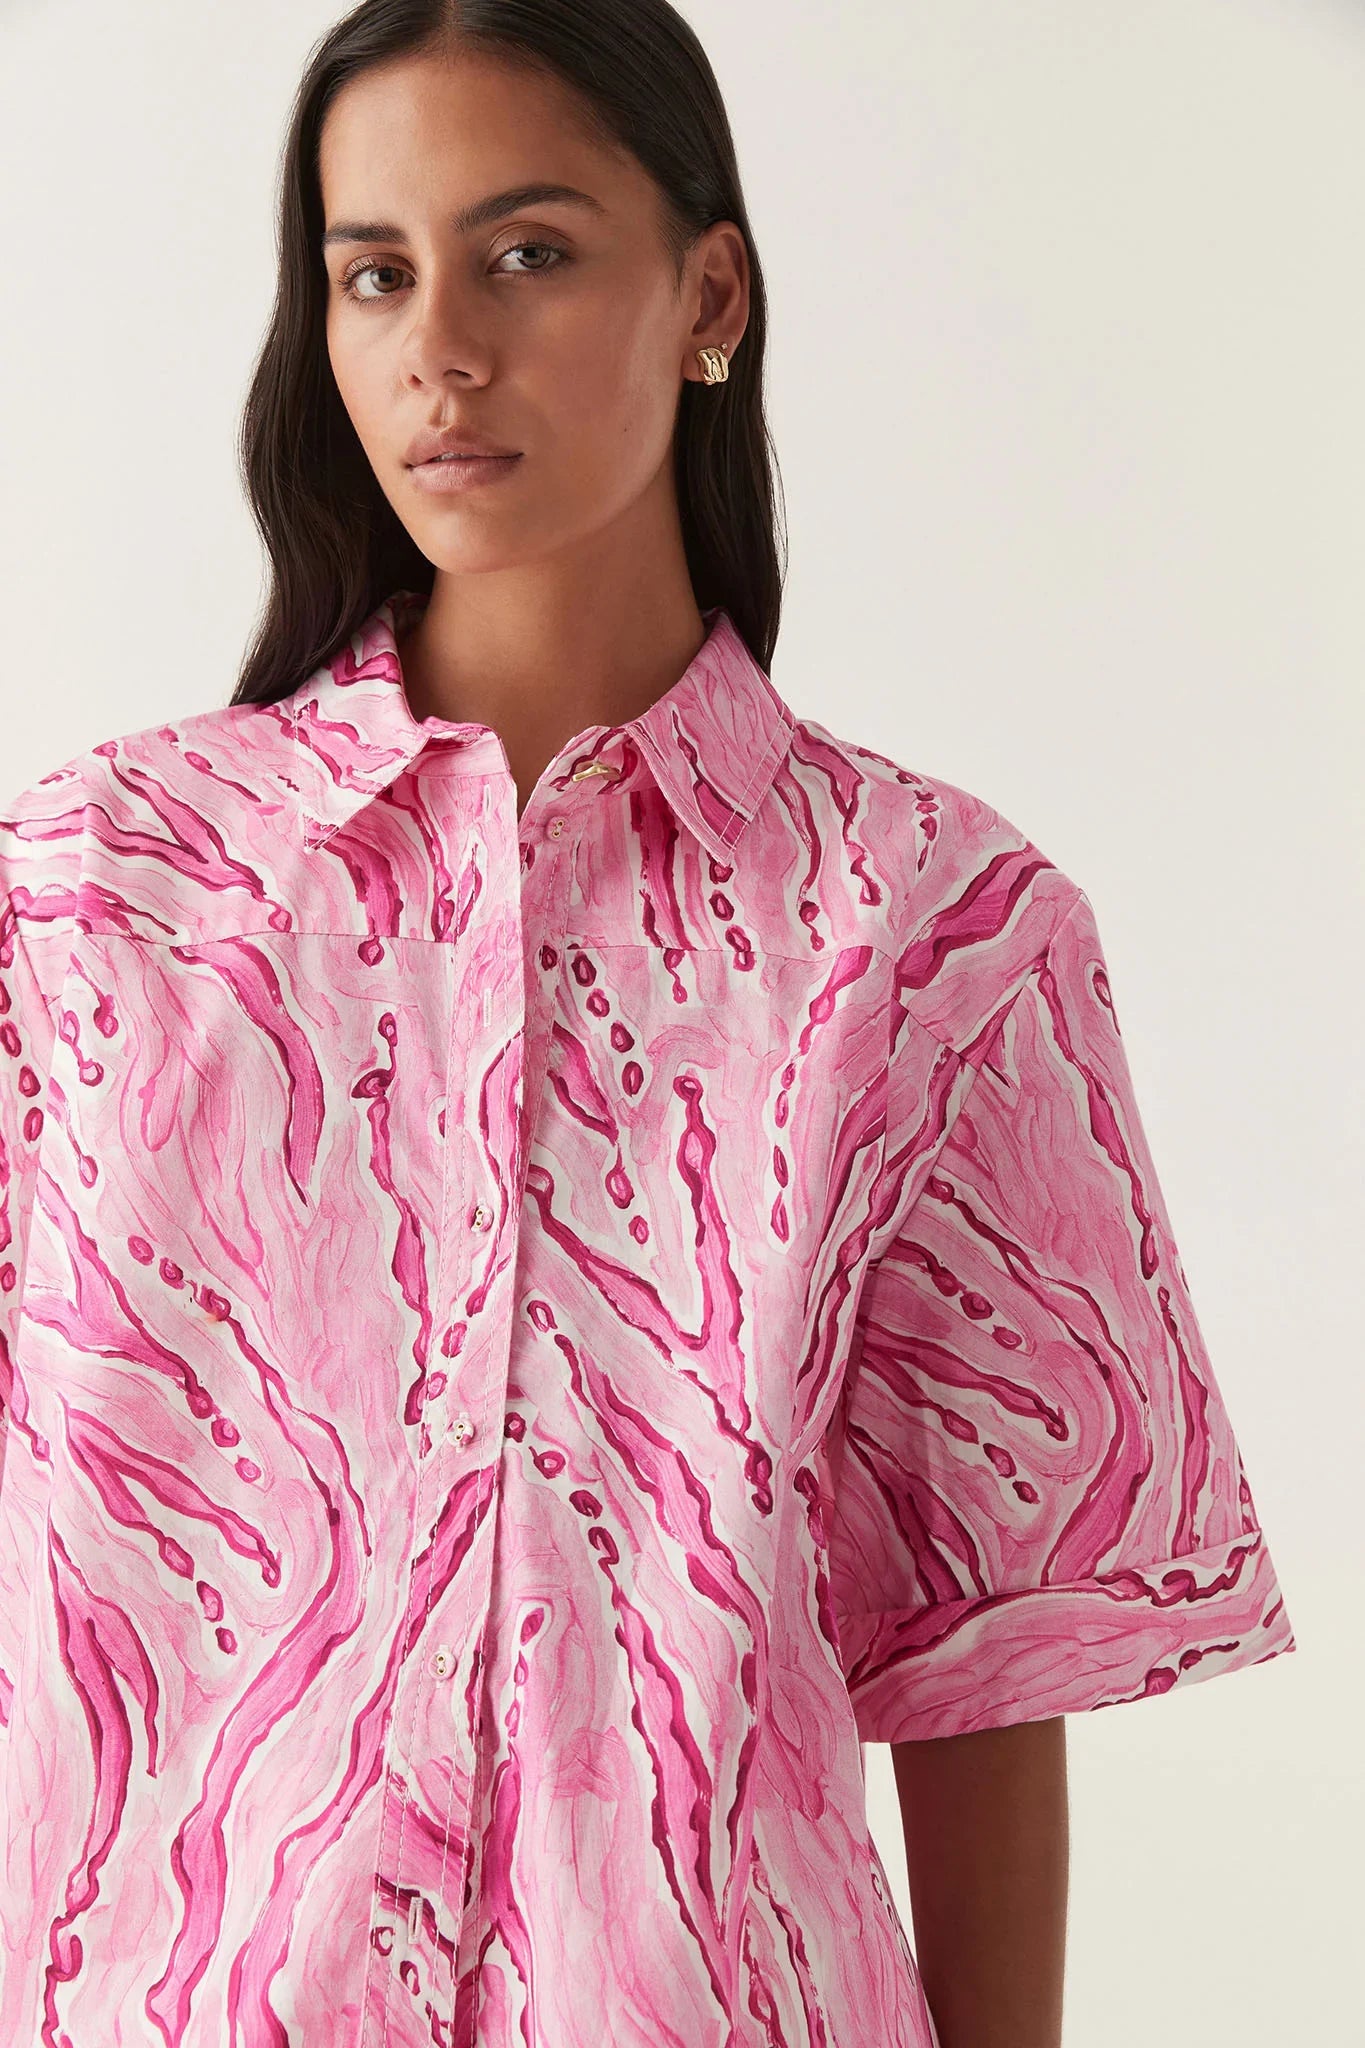 AJ Blaze Stitch Oversized Cotton Shirt in Dappled Flame Pink